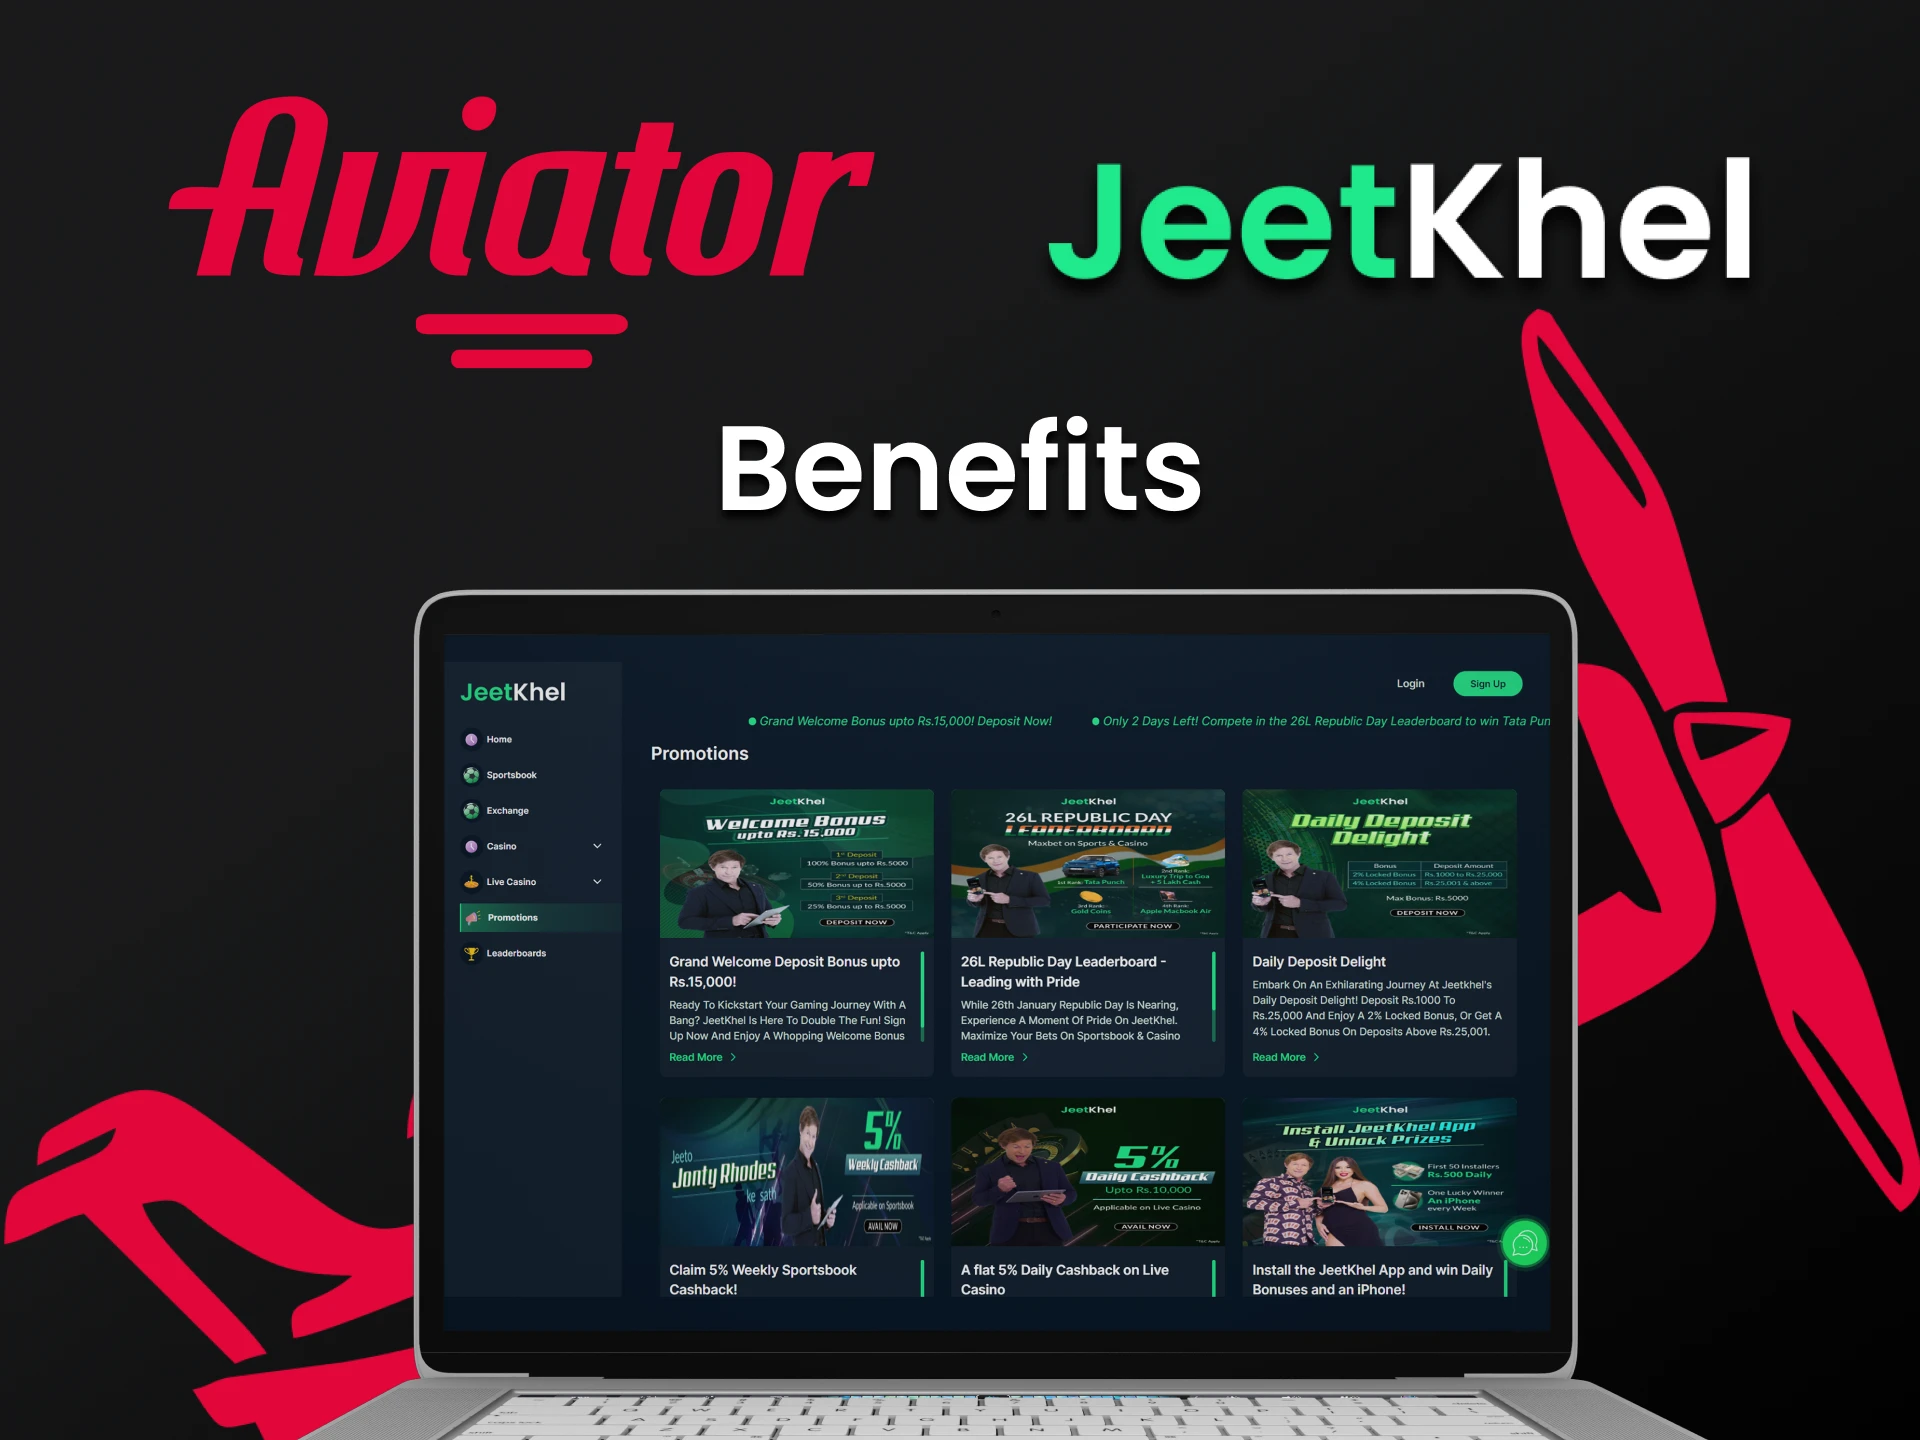 For playing Aviator, JeetKhel has many advantages.